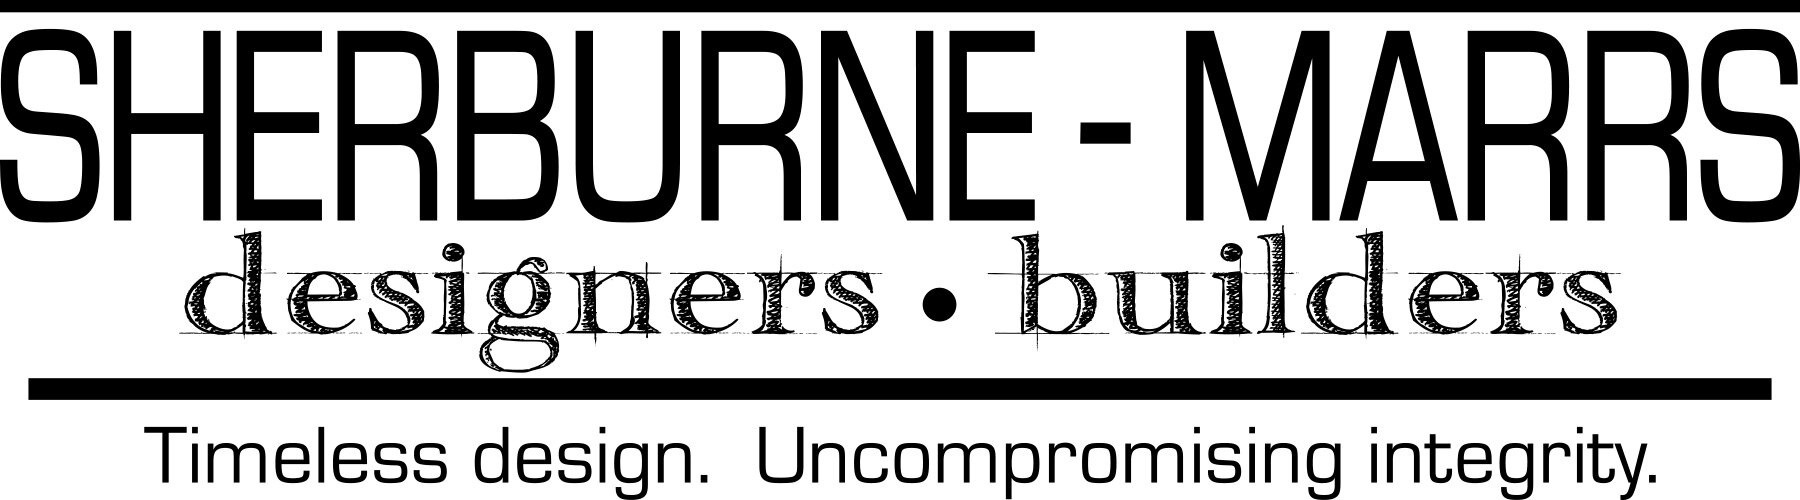 Sherburne-Marrs_logo.jpg